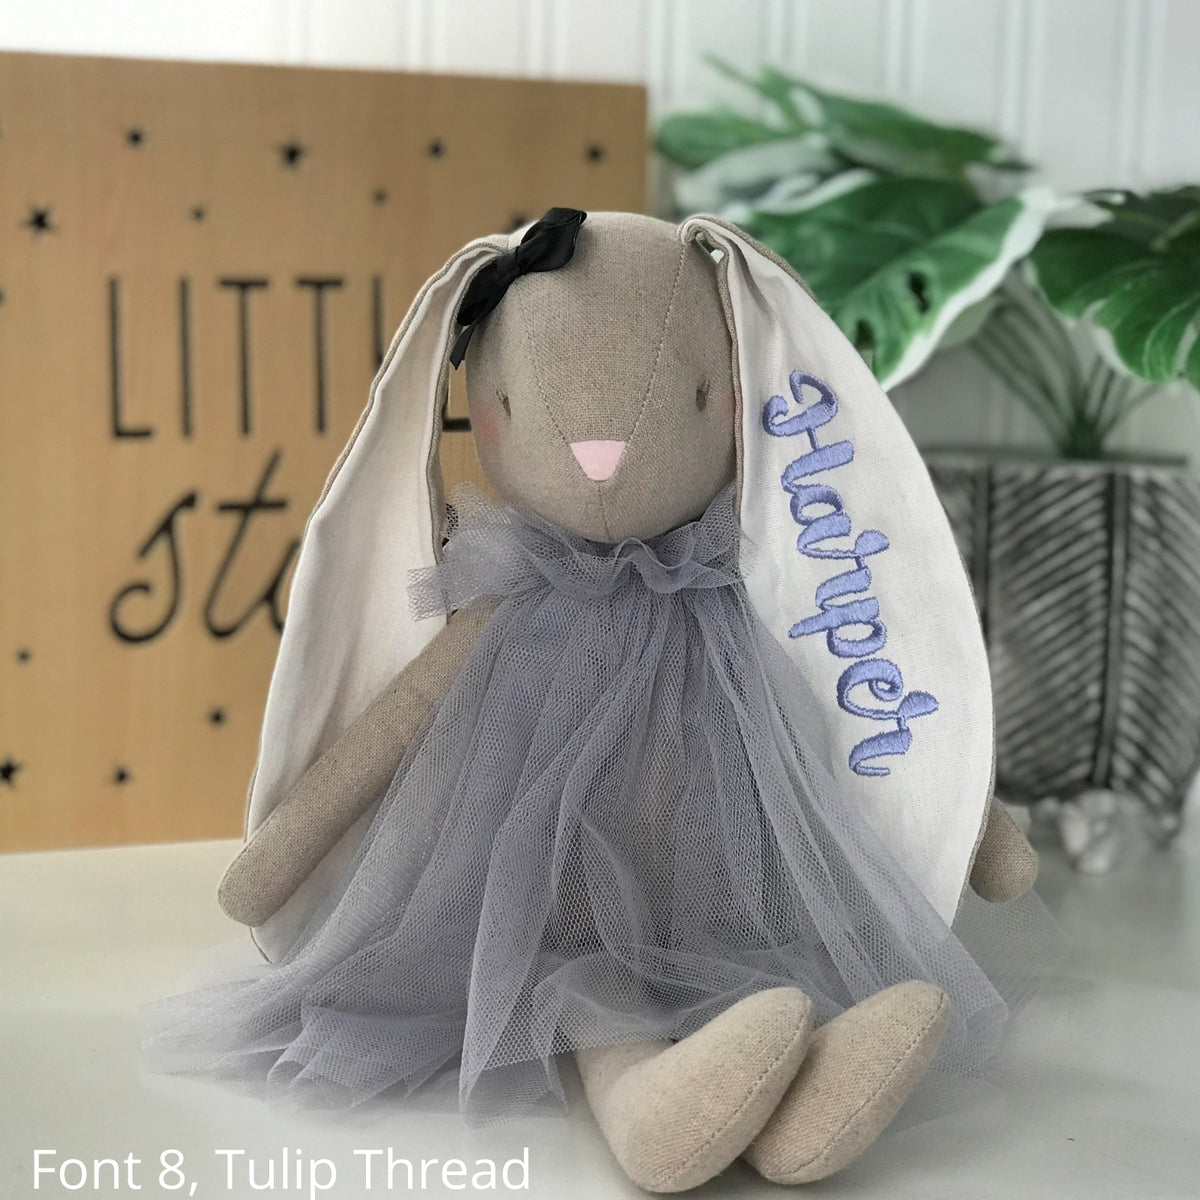 Personalised Alimrose Bunny Australia Baby Beth Lavender Bunny Jellycat